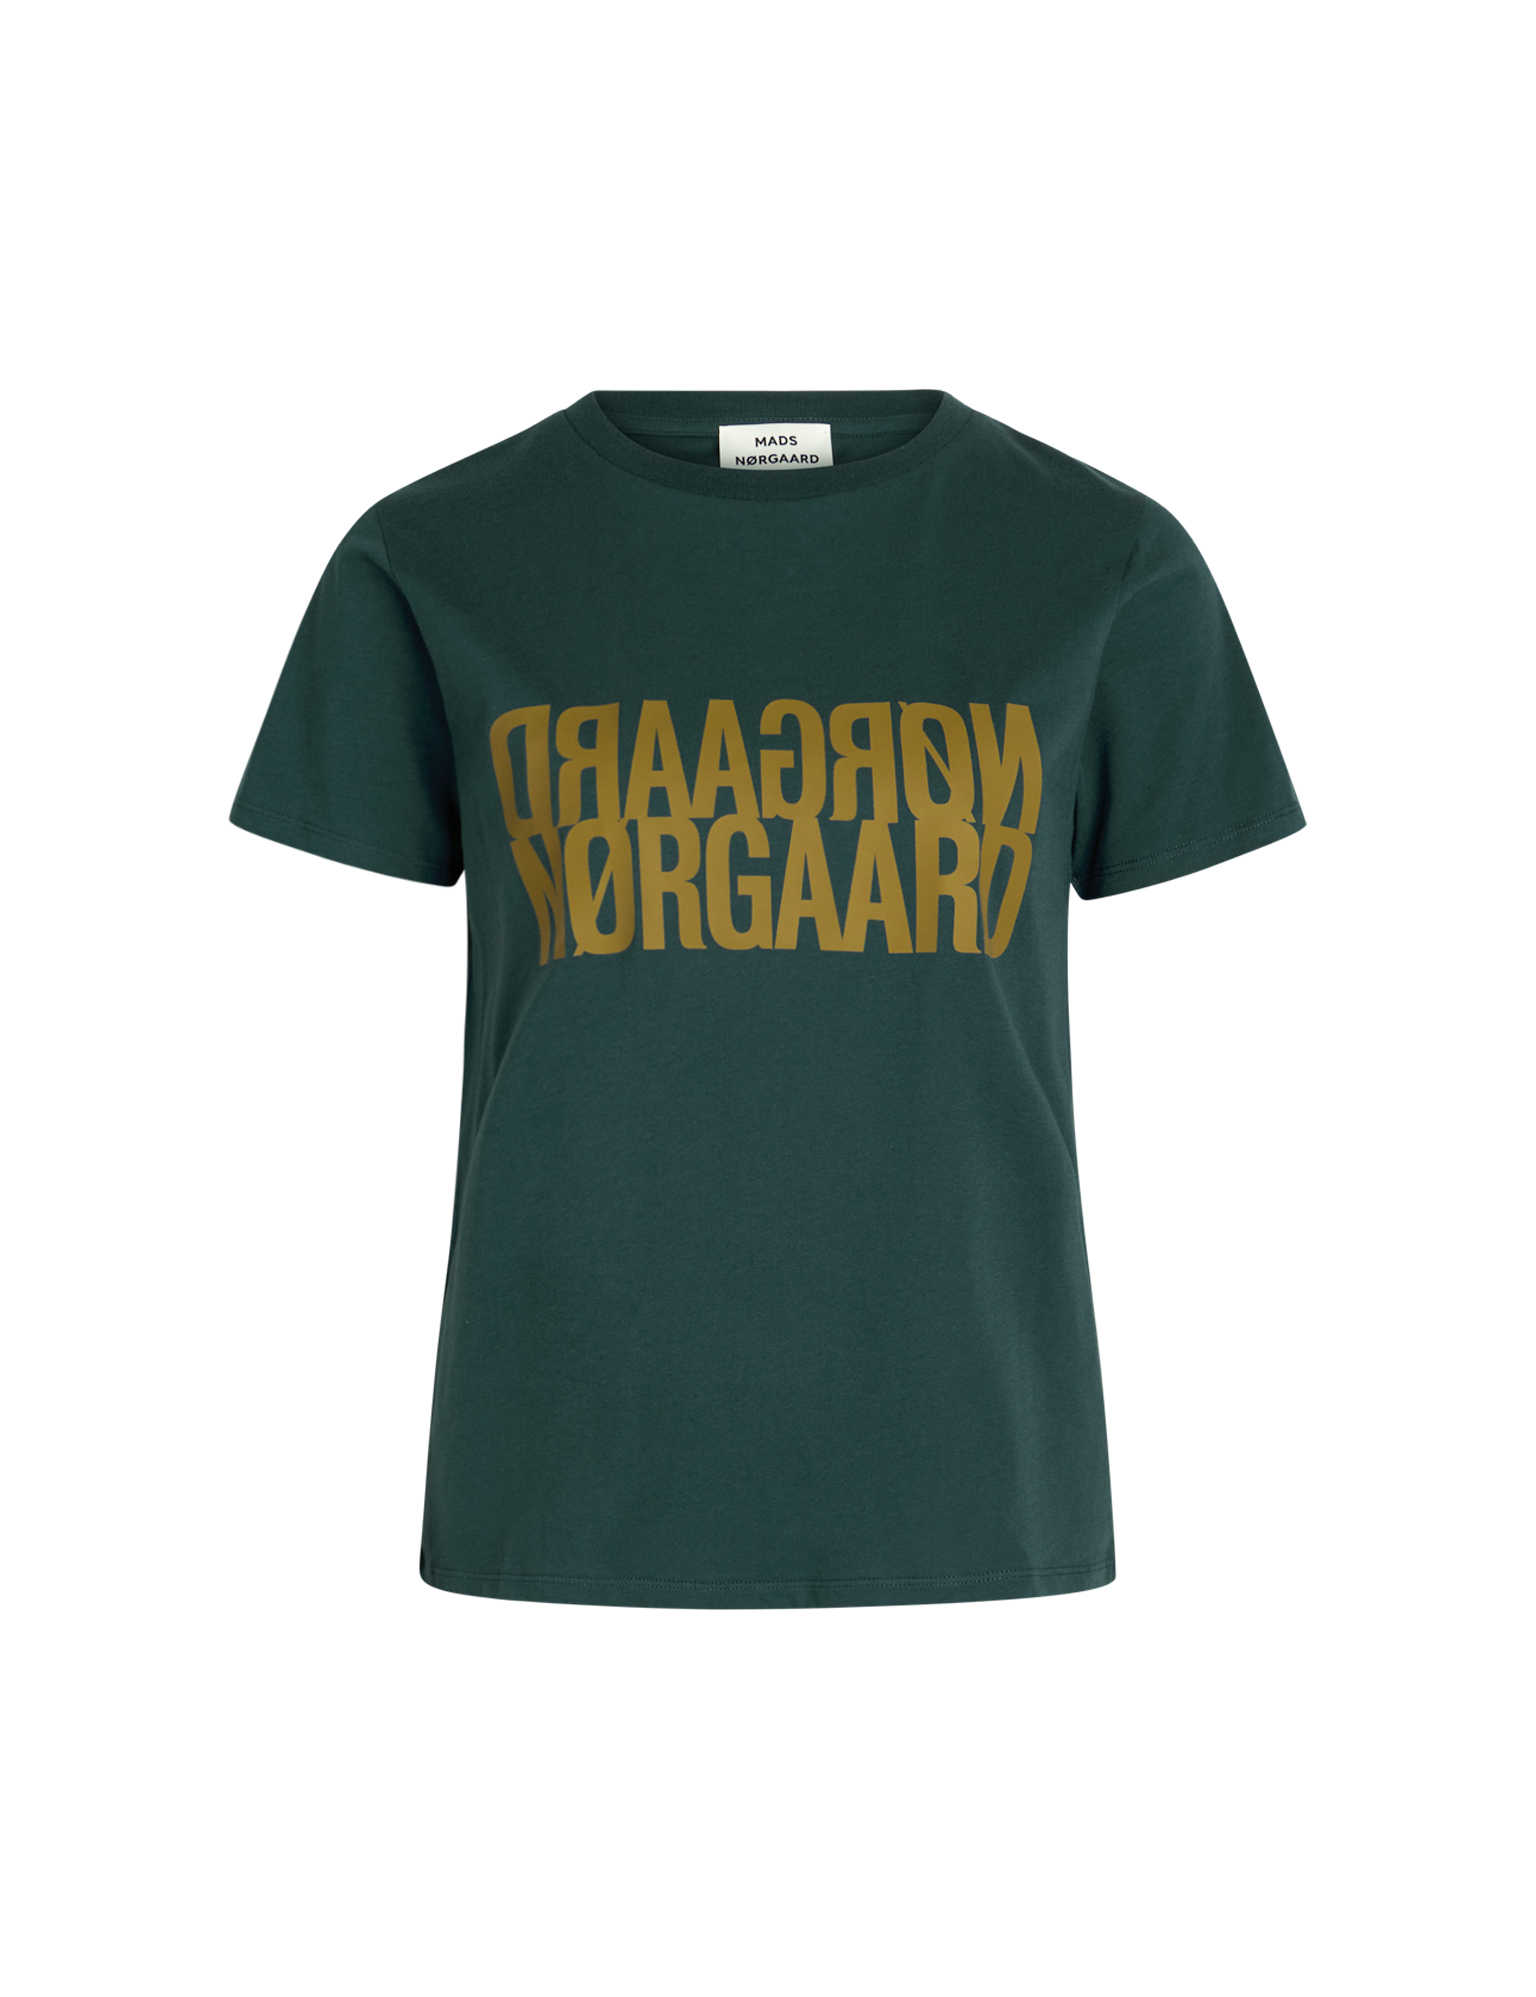 Single Organic Trenda P T-shirt, Magical Forest, M